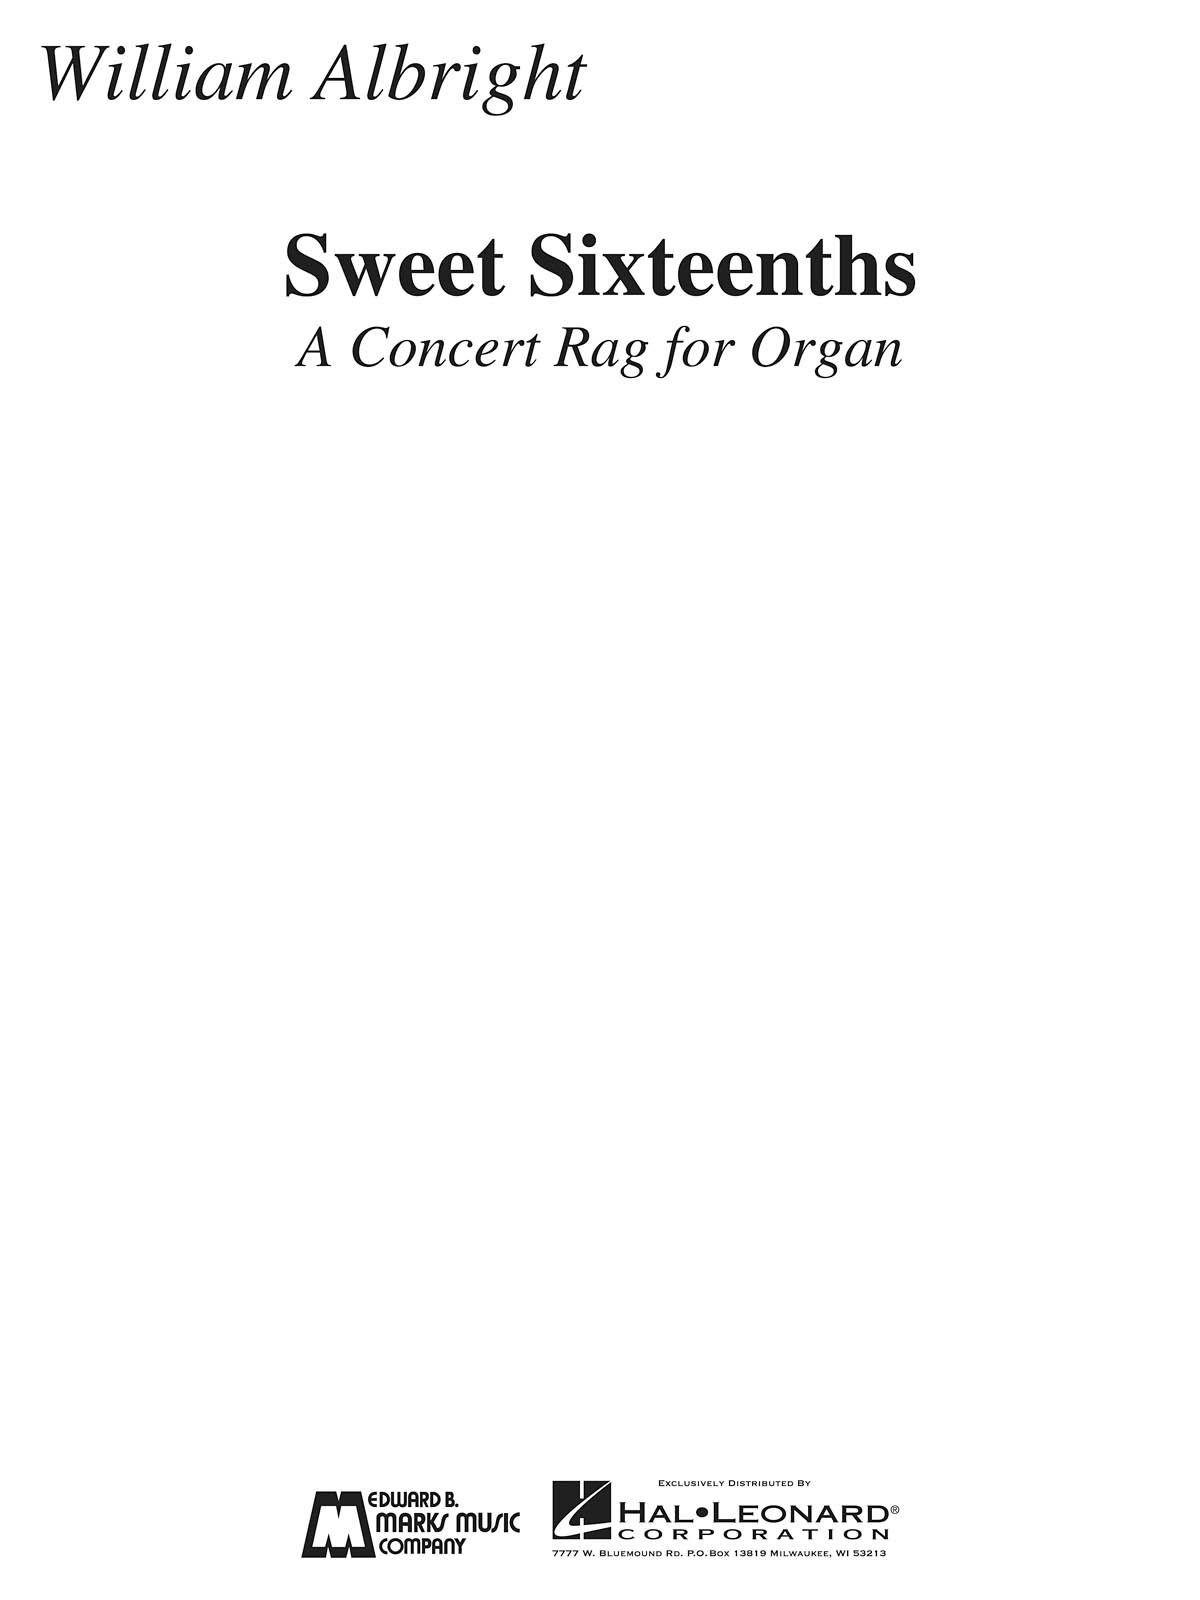 William Albright: Sweet Sixteenths - A Concert Rag For Organ: Organ: